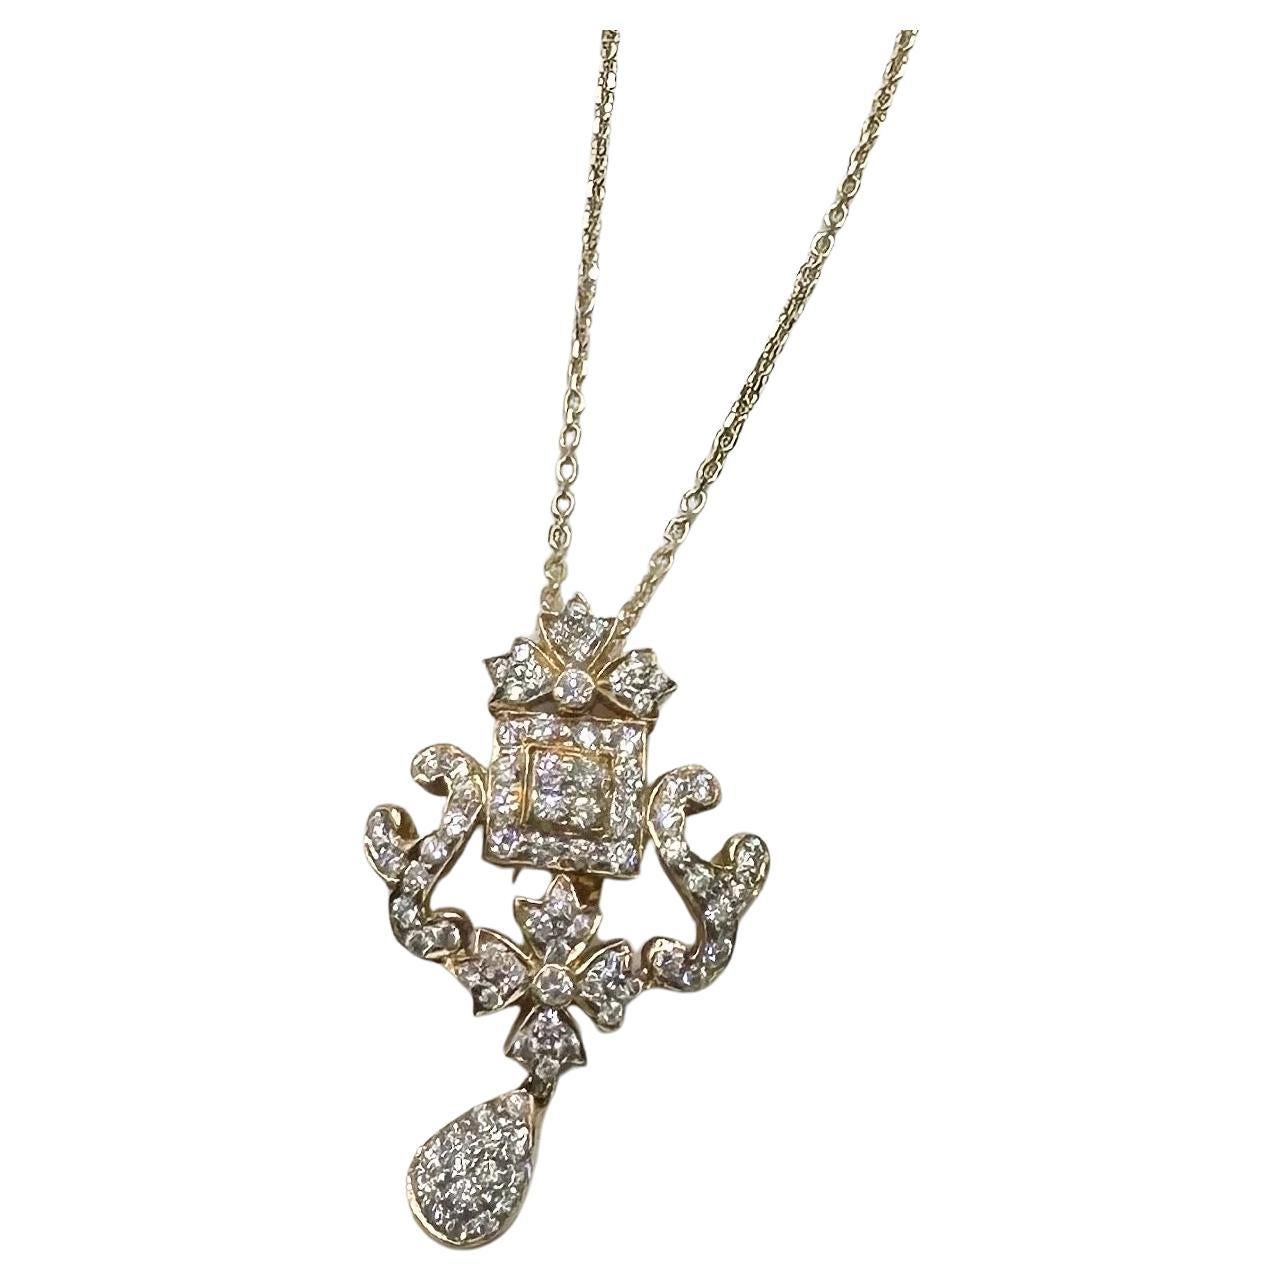 1ct Vintage diamond pendant necklace 18KT yellow gold chain 18"